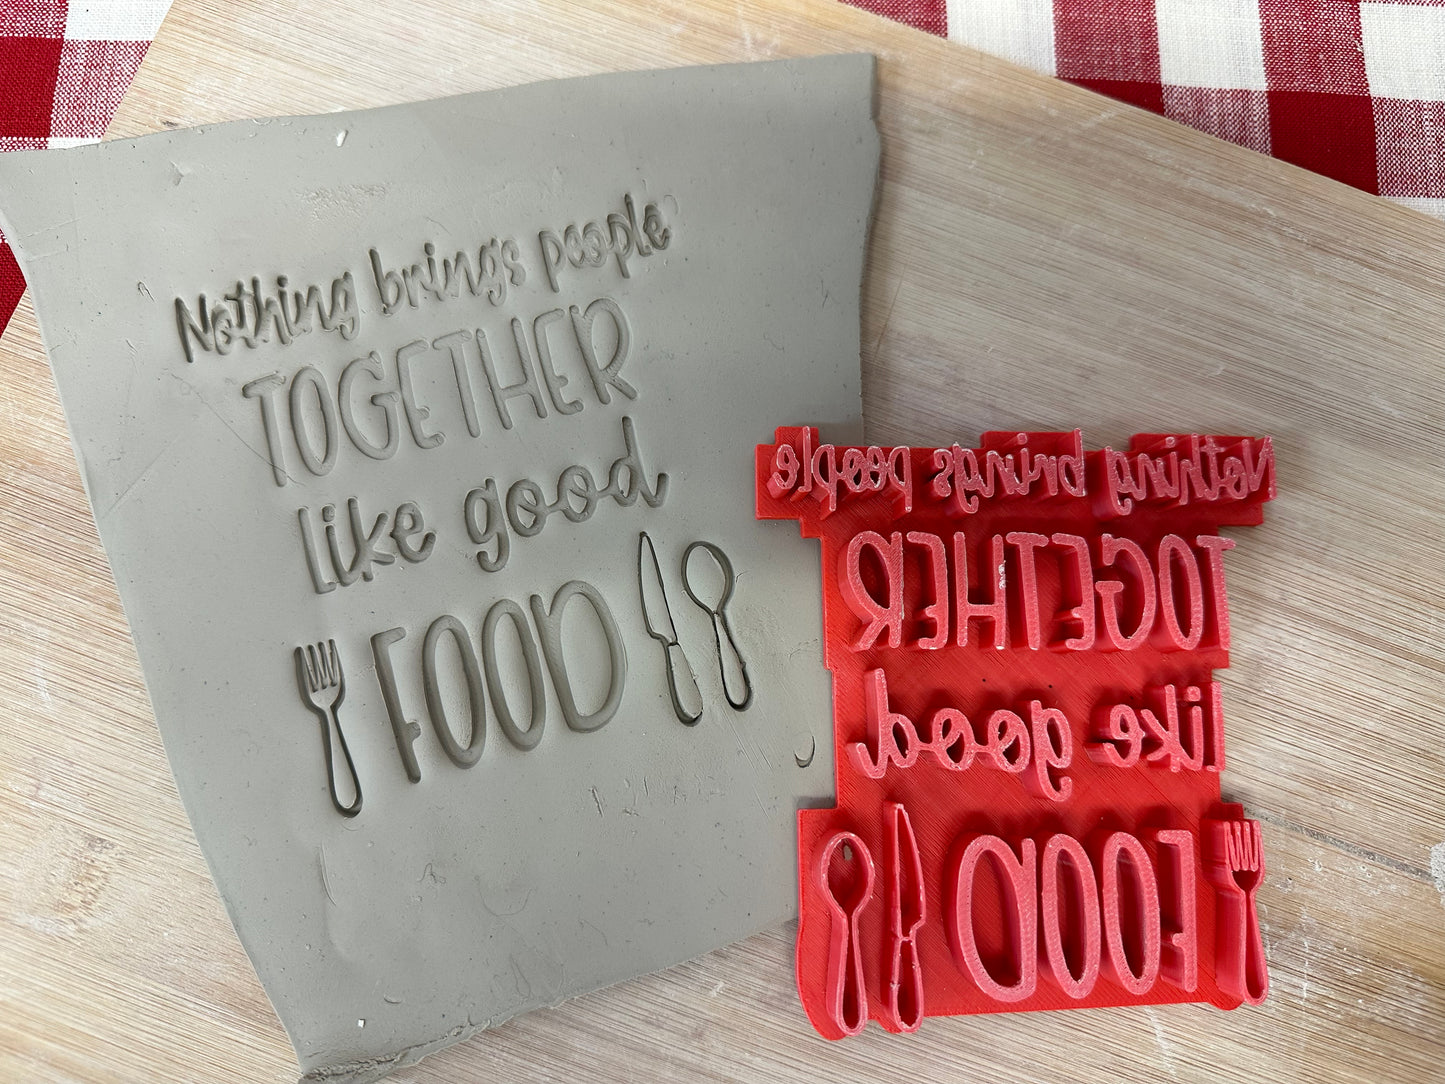 "Nothing Brings People Together like Good Food" word stamp - plastic 3D printed, multiple sizes